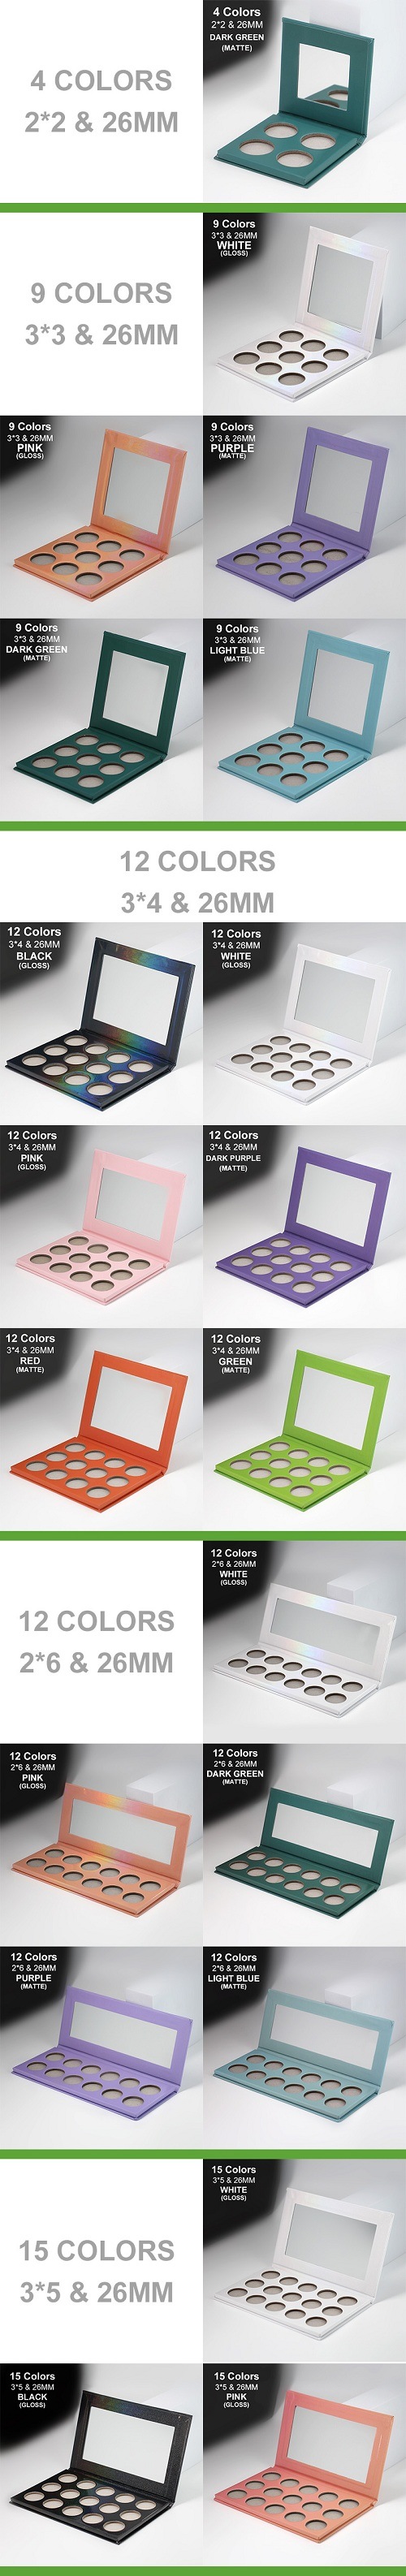 Hot Sale OEM Four-Color Highlighter Eye Shadow Tray, Multi-Color Eye Shadow Tray, DIY Eye Shadow Tray